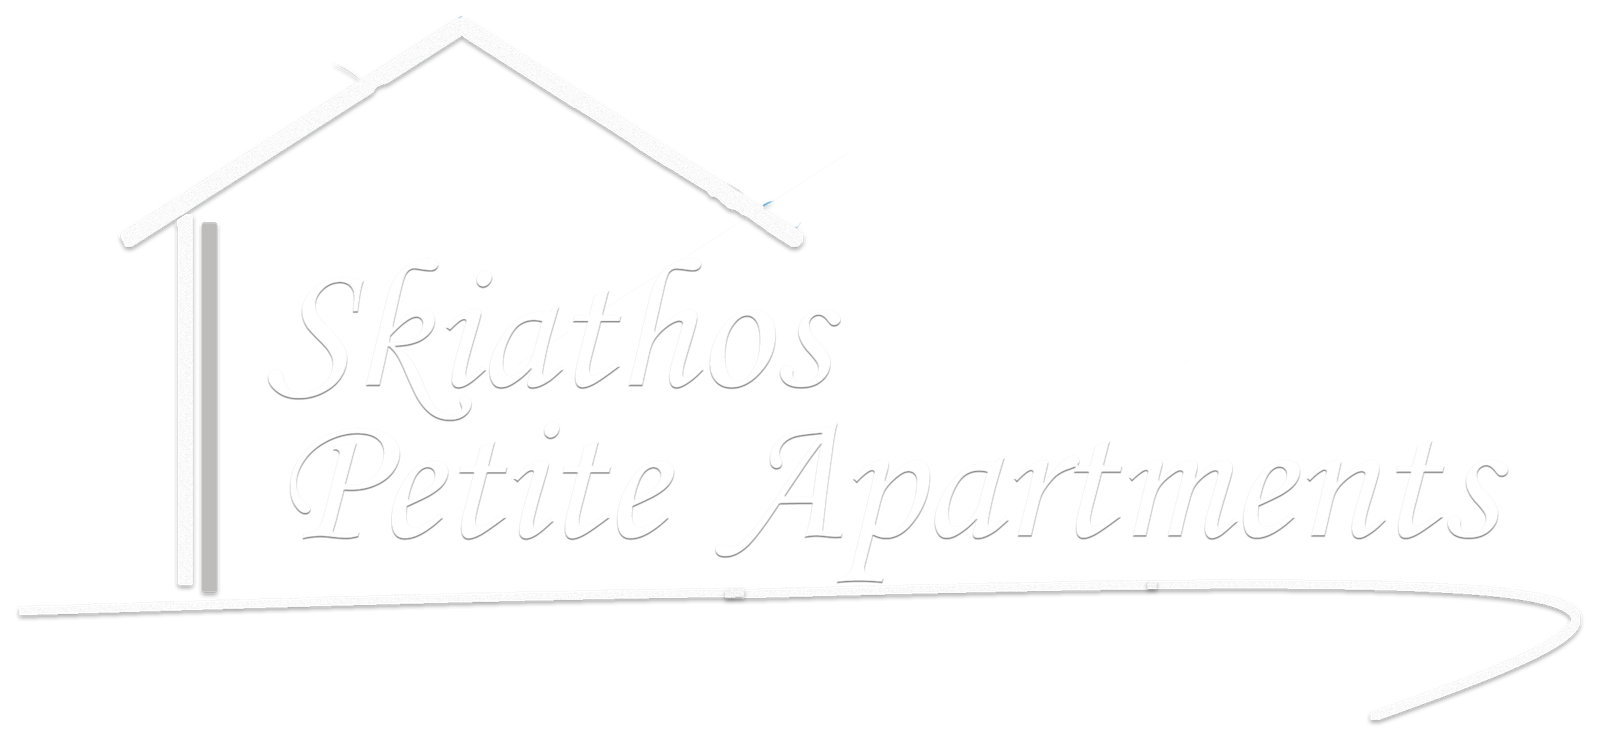 Skiathos Petite Apartments | Attività - Skiathos Petite Apartments